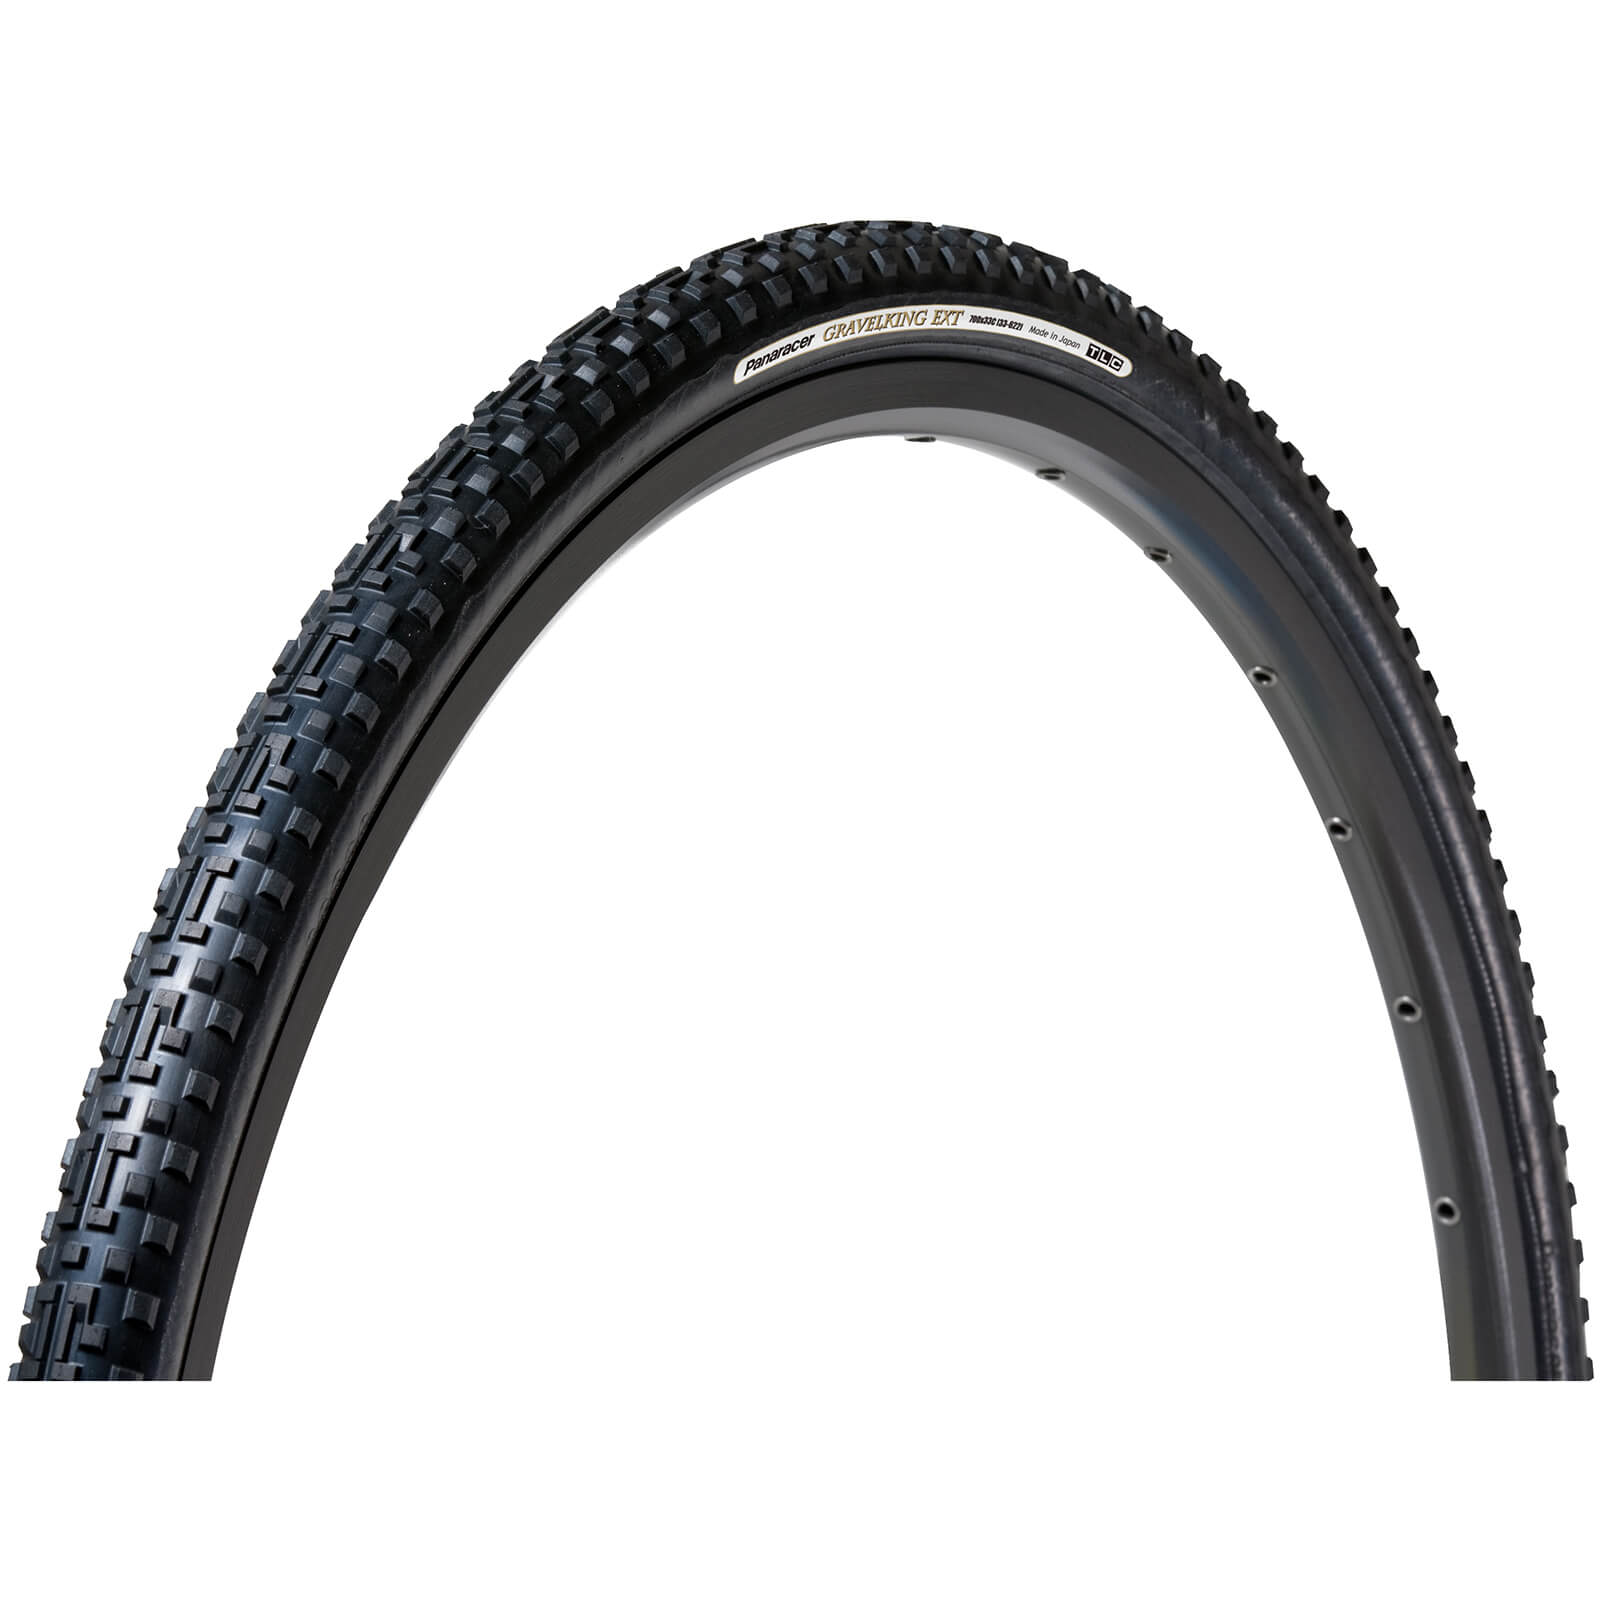 Panaracer Gravel King EXT TLC Folding Gravel Tyre - 700 x 33c - BLACK/BLACK